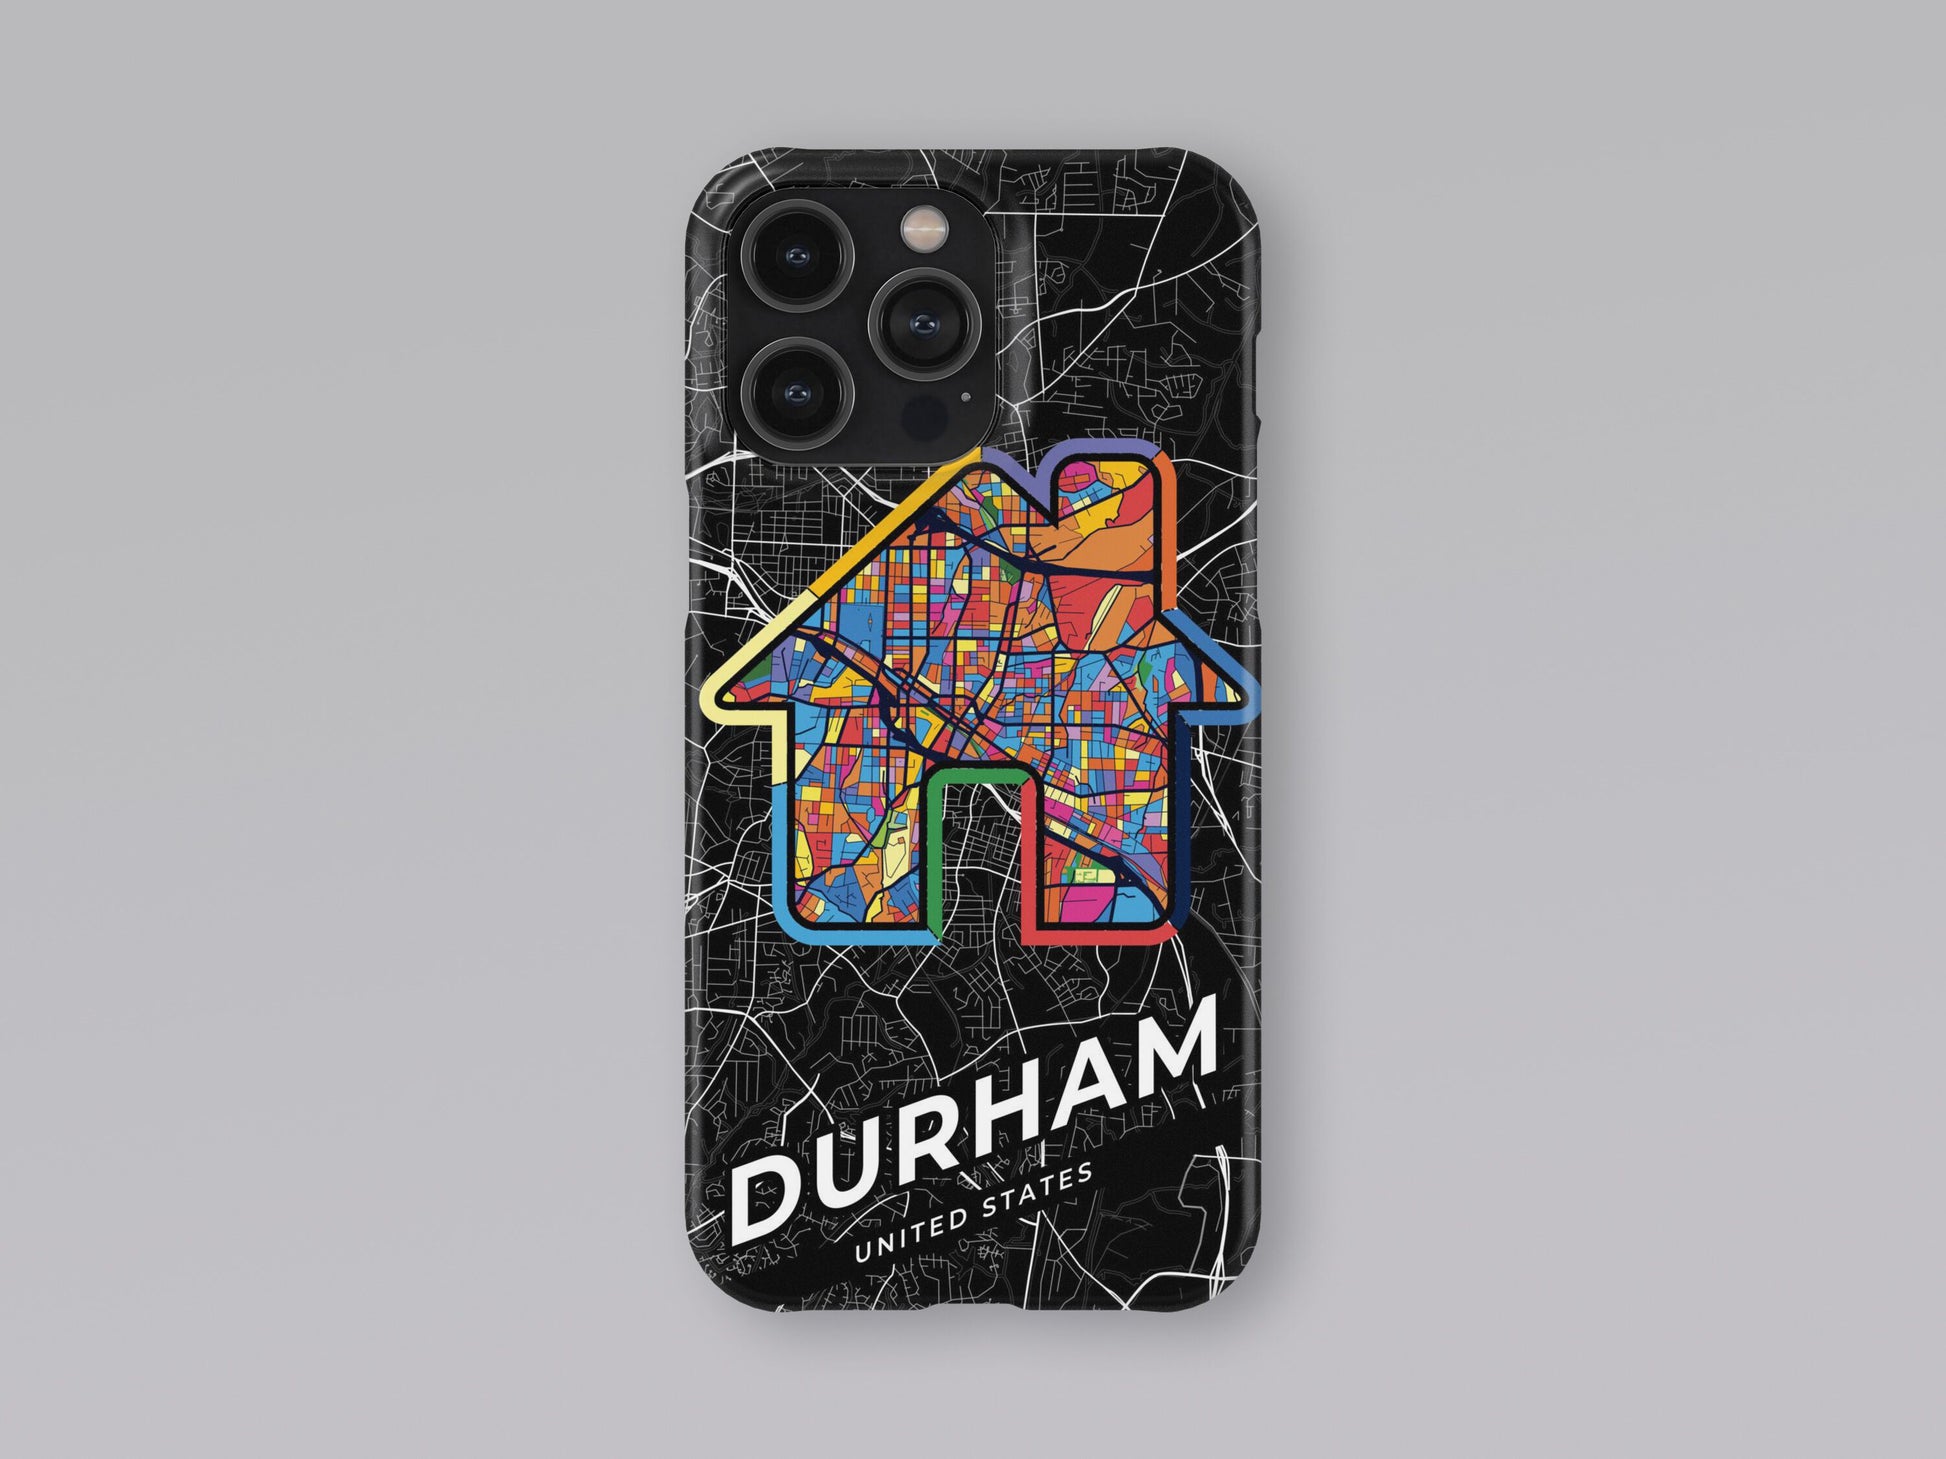 Durham North Carolina slim phone case with colorful icon. Birthday, wedding or housewarming gift. Couple match cases. 3